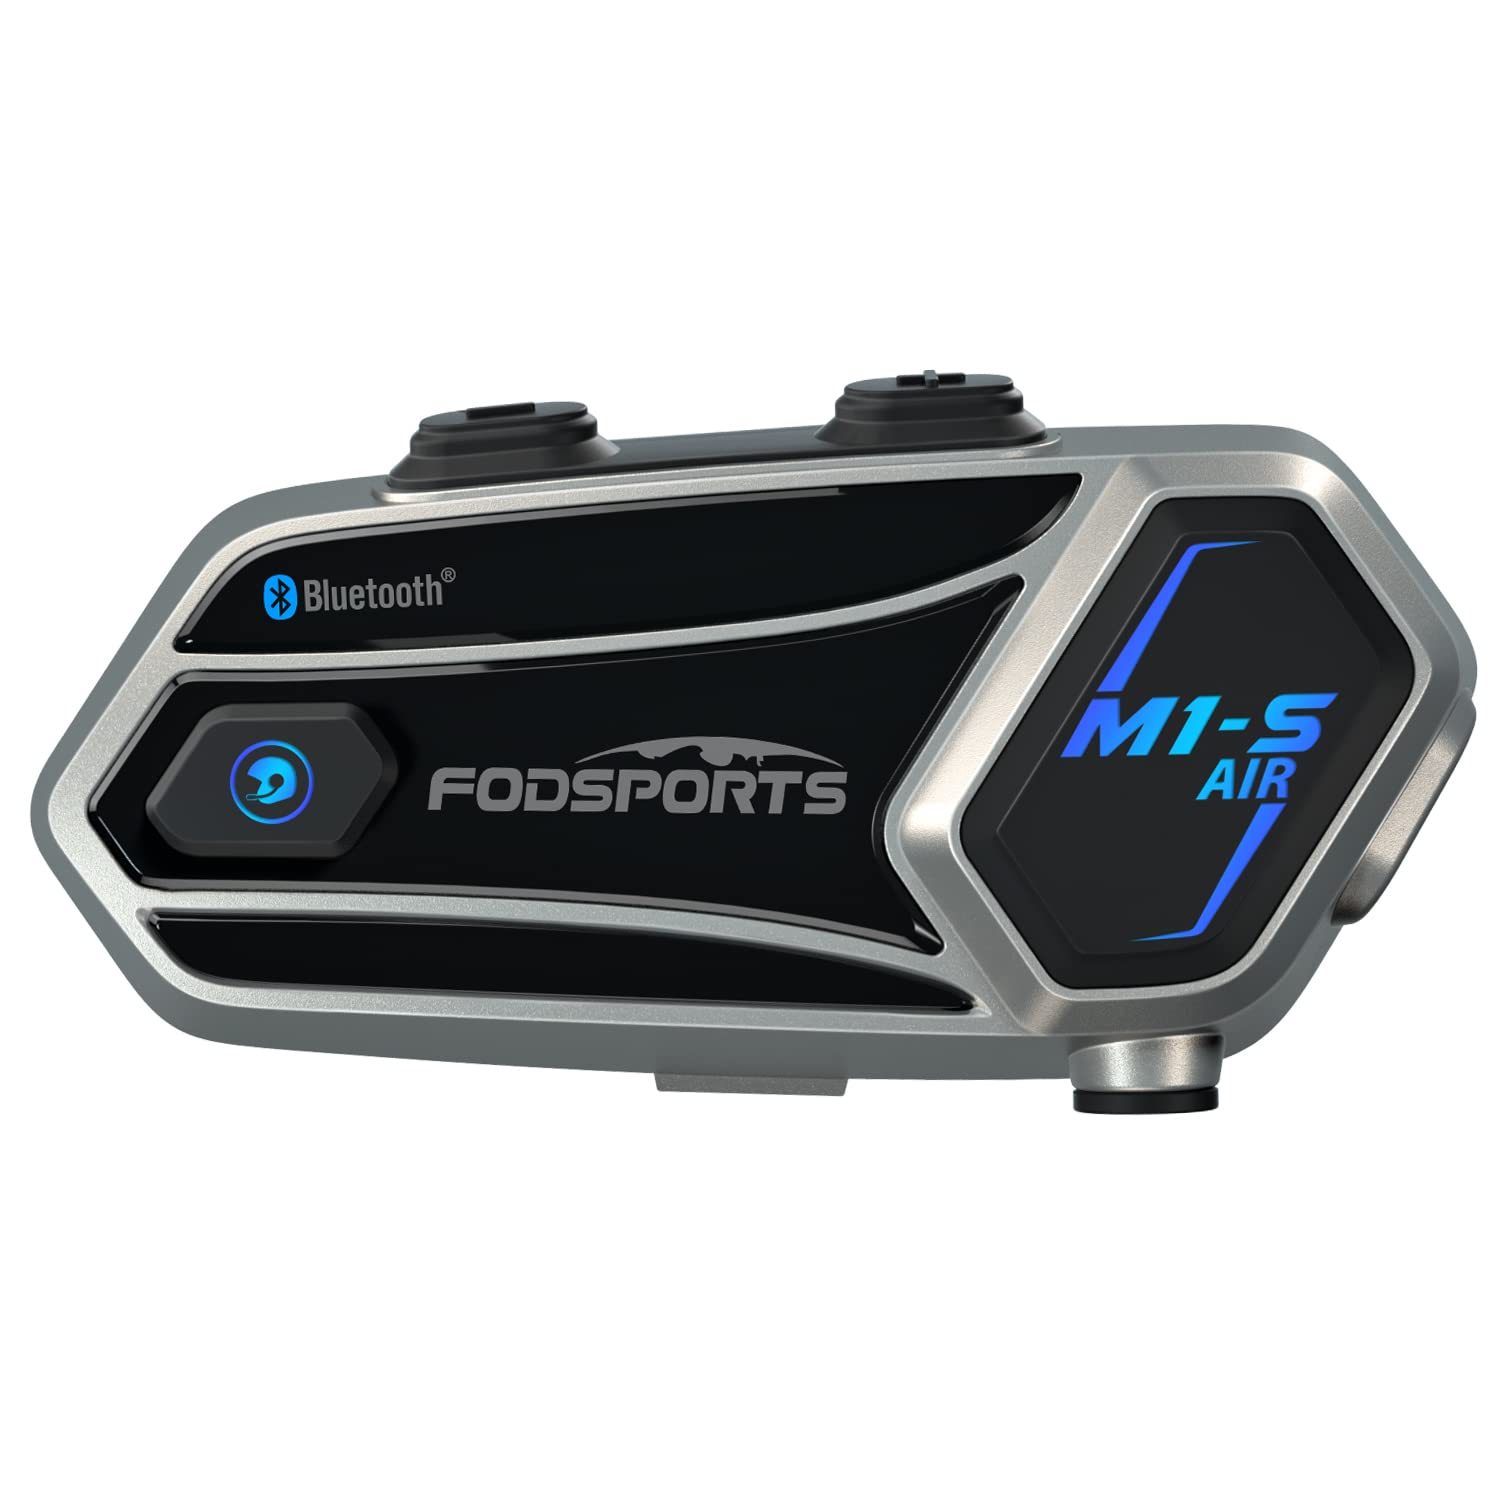 Fodsports M1-S AIR Motorrad Headset, Motorradhelm Bluetooth Headset, Motorrad Kommunikationssystem mit 900 mAh Batterie Musik teilen Mikrofon stumm Funktion